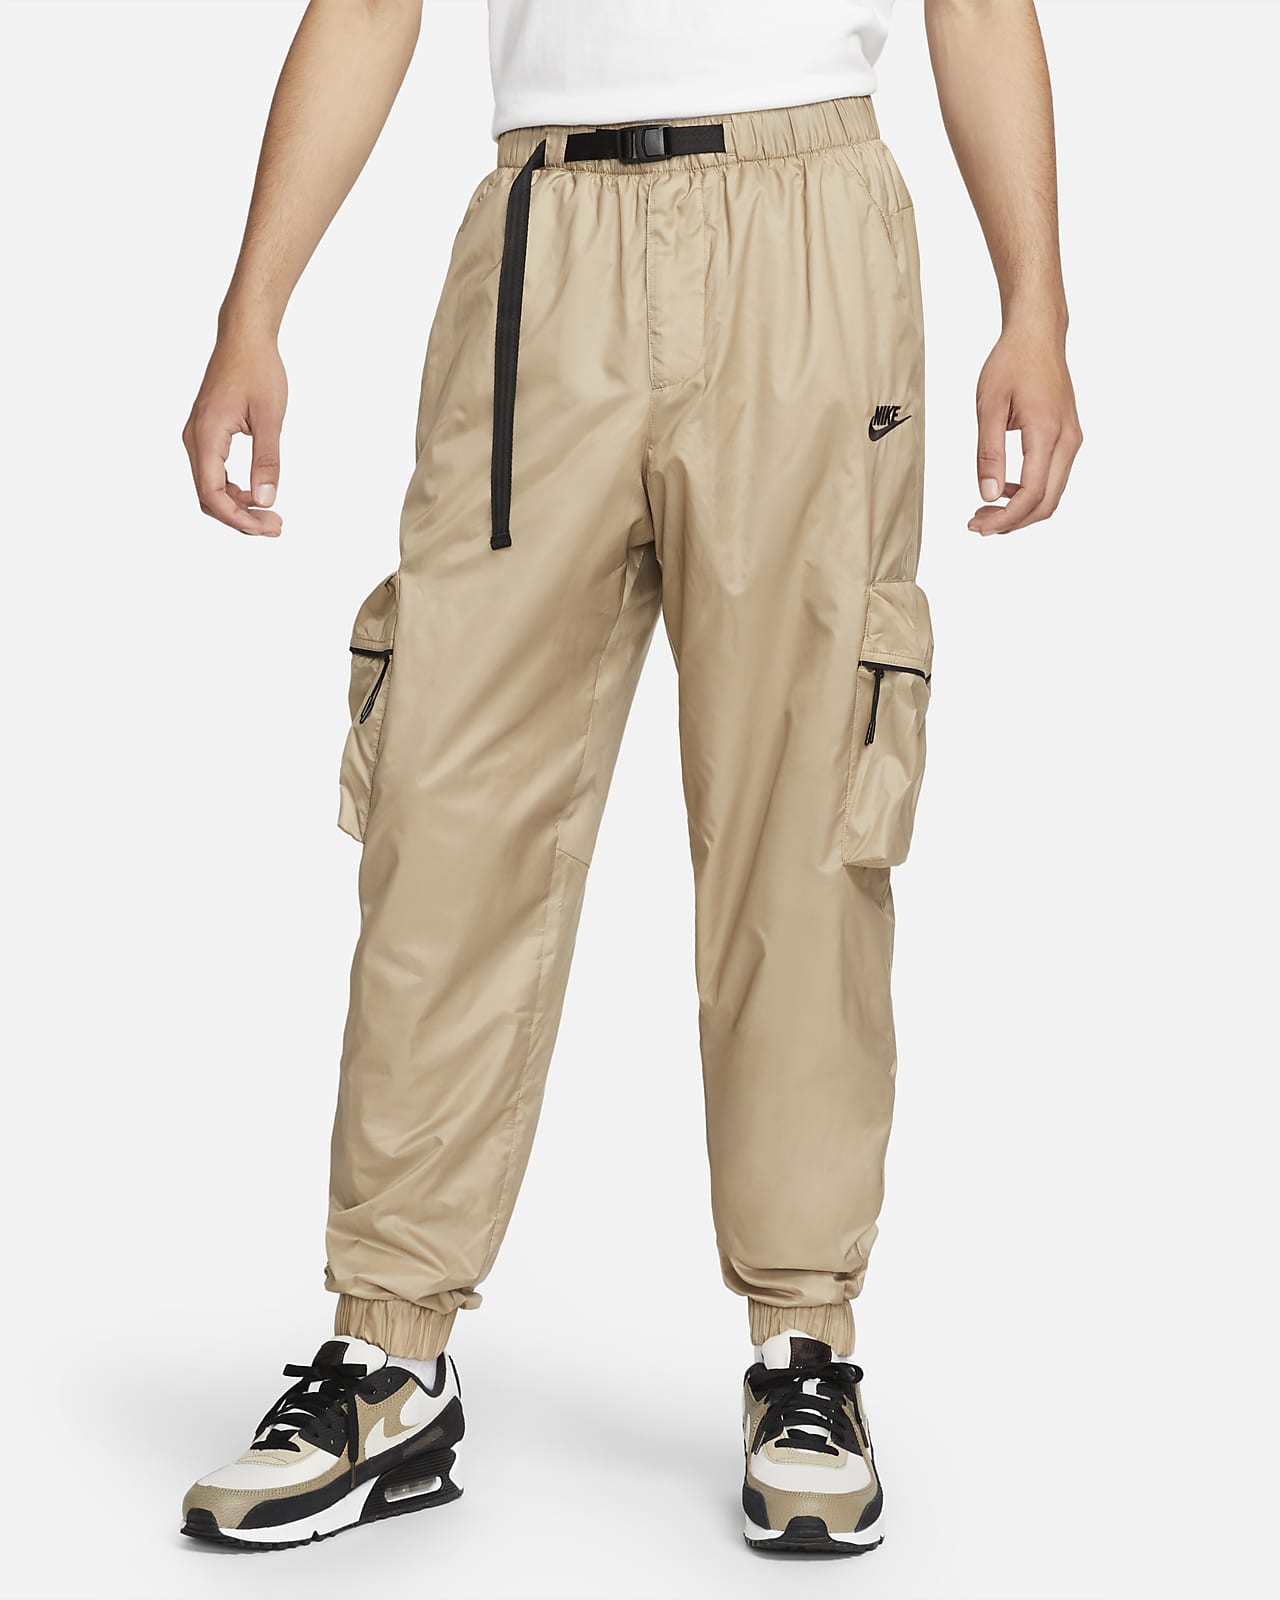 Nike Tech Pantalons de teixit Woven folrats - Home